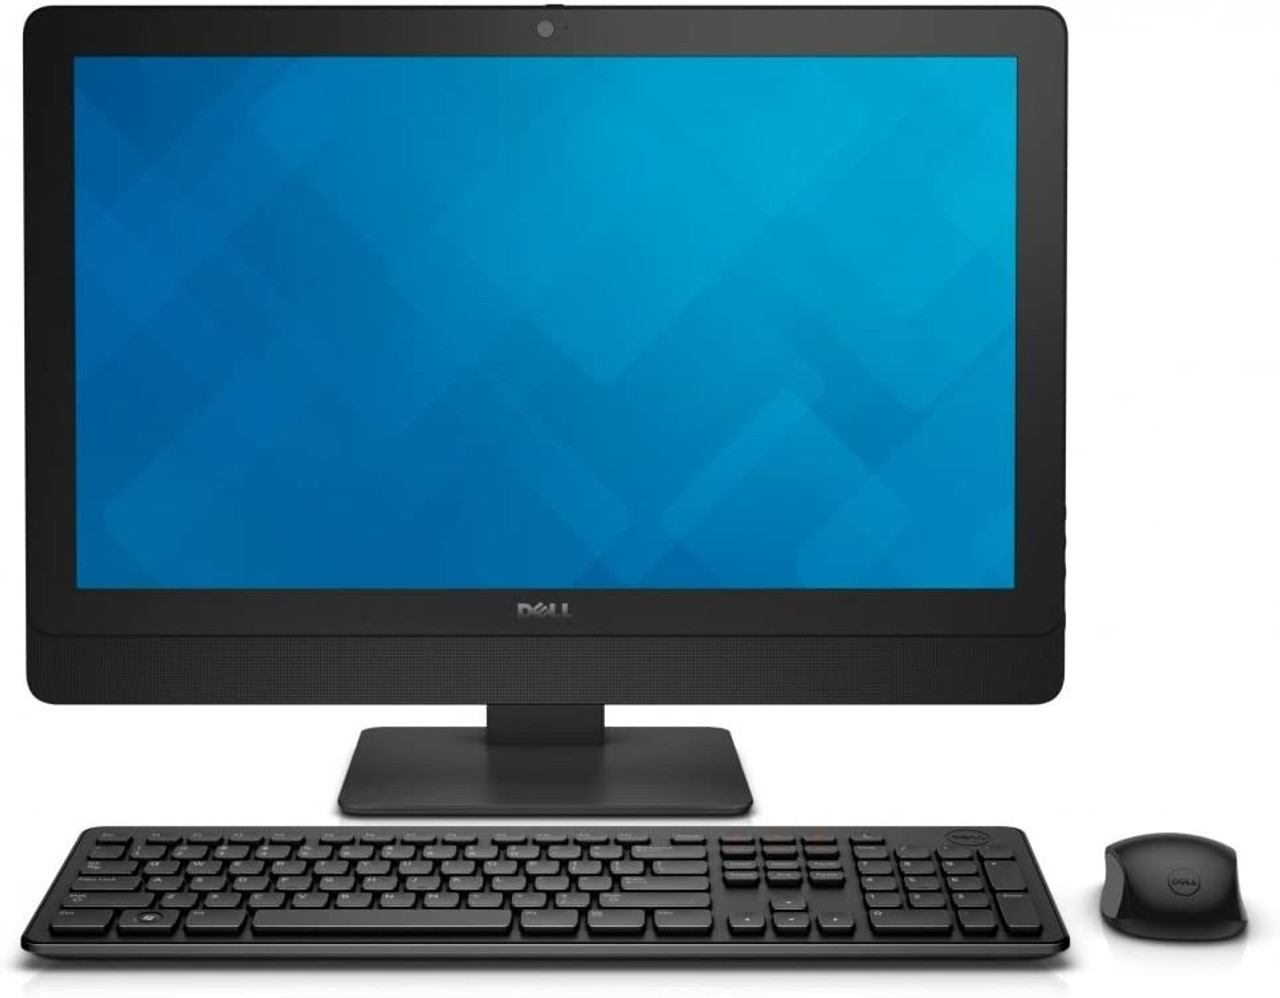 Dell OptiPlex 9030 All-in-One Desktop Computer 23" AIO PC, Windows 10 Pro, Intel Core i5-4590S 3.20GHz, 8GB RAM, 120GB SSD, Webcam, WiFi, Bluetooth (Renewed)